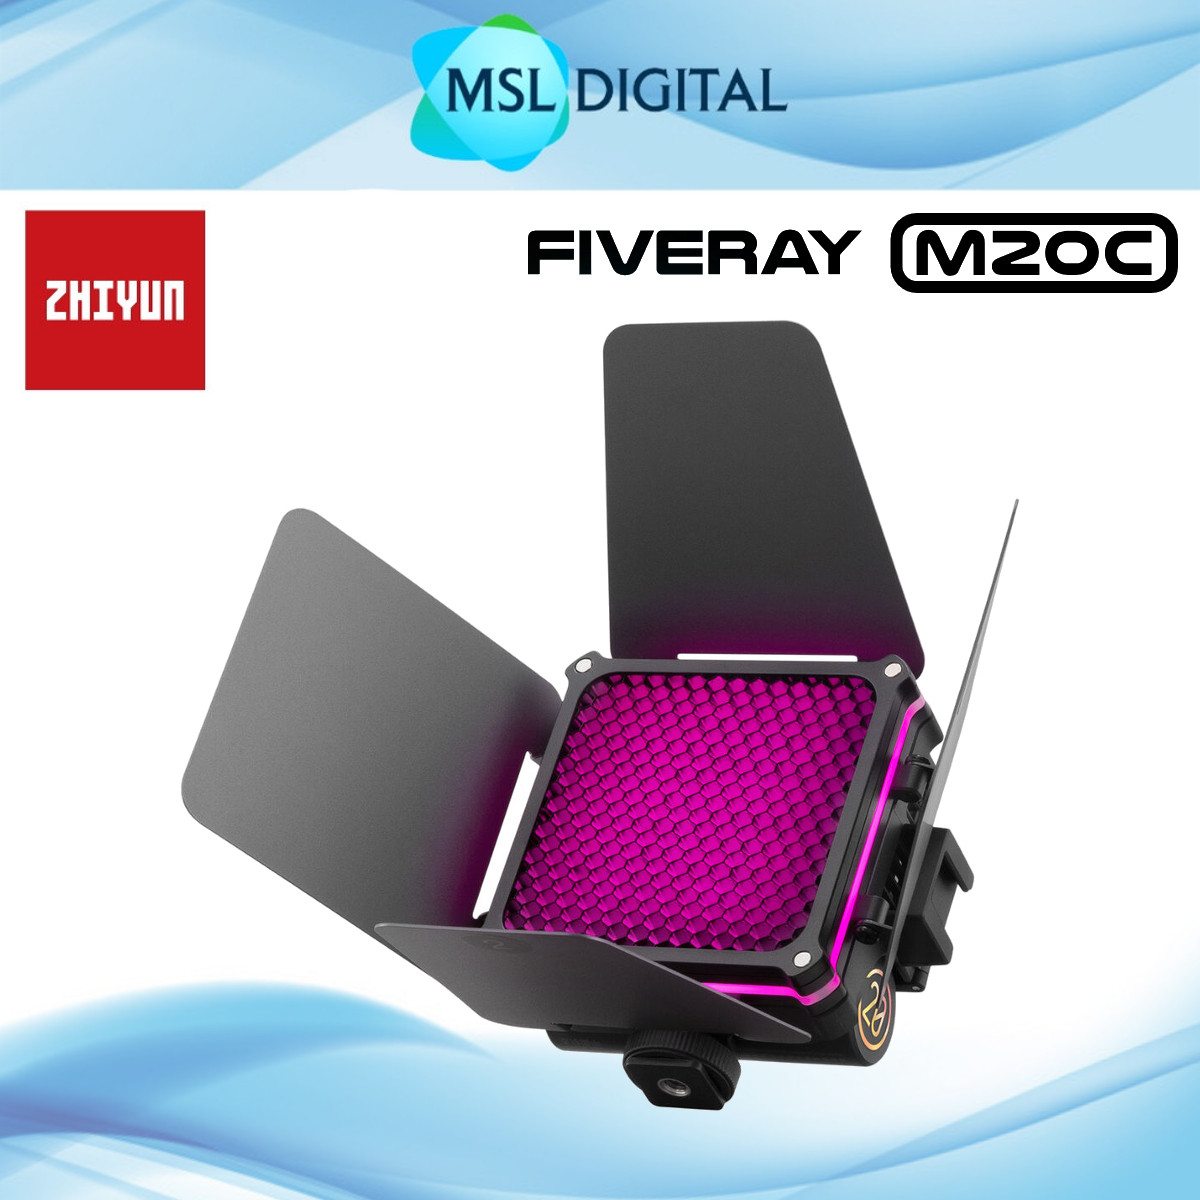 Zhiyun FIVERAY M20C RGB LED Light (Combo Version)